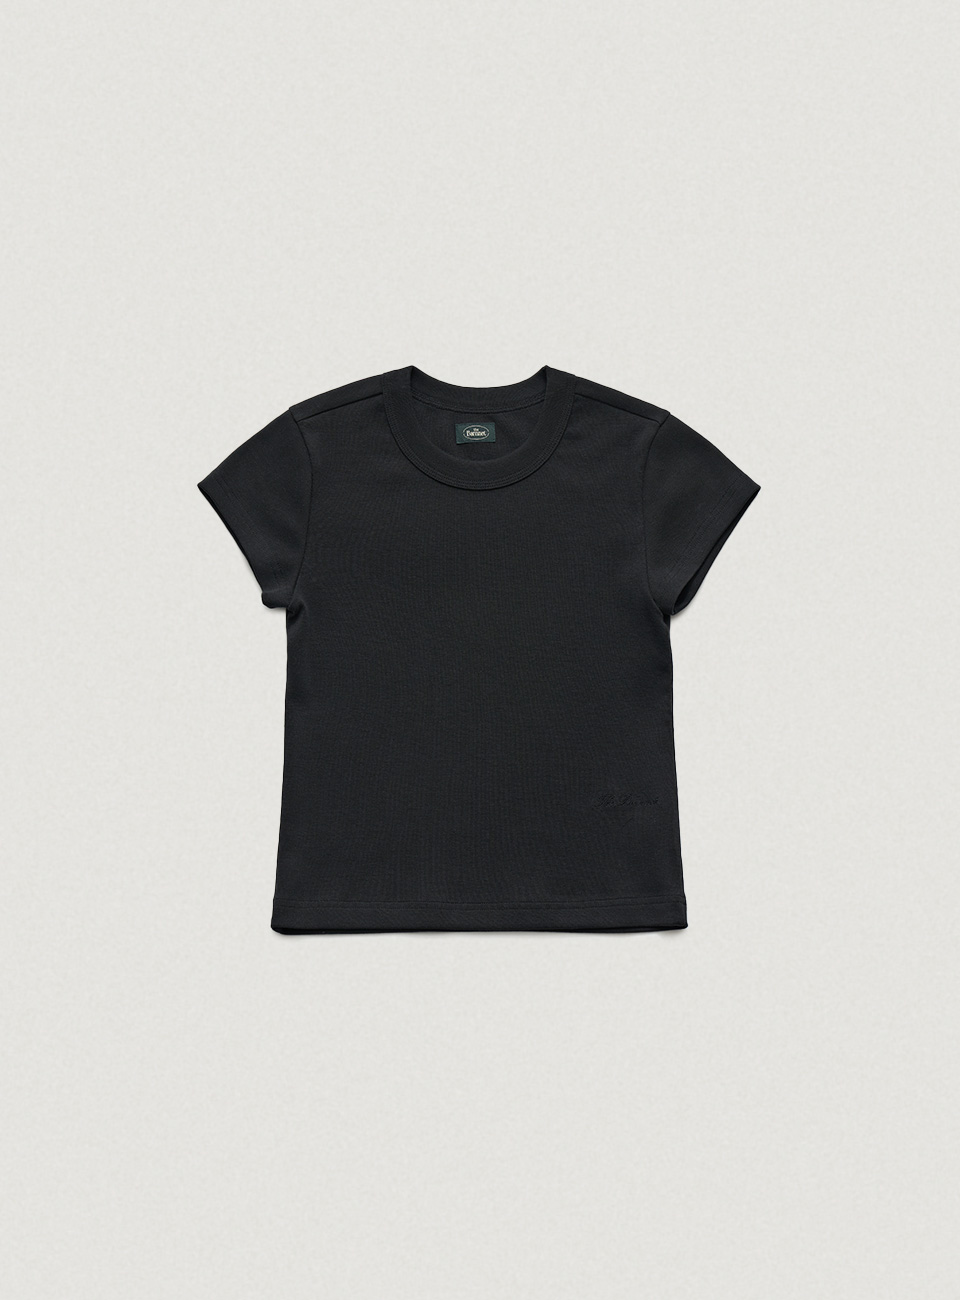 Black Fudge Cropped T-Shirt [4월 초 순차 배송]